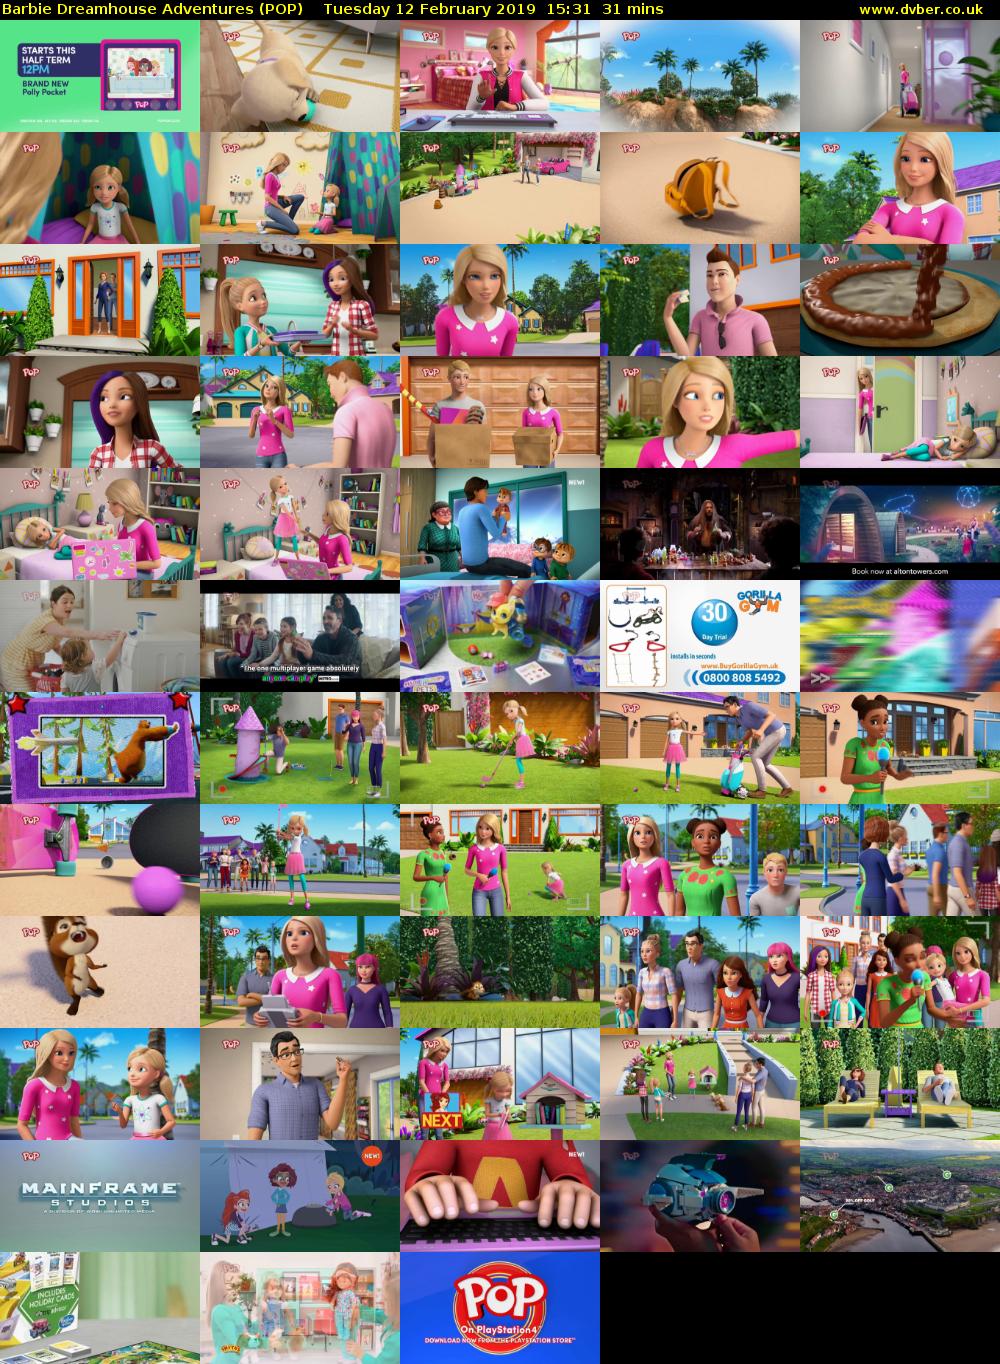 Barbie Dreamhouse Adventures (POP) Tuesday 12 February 2019 15:31 - 16:02